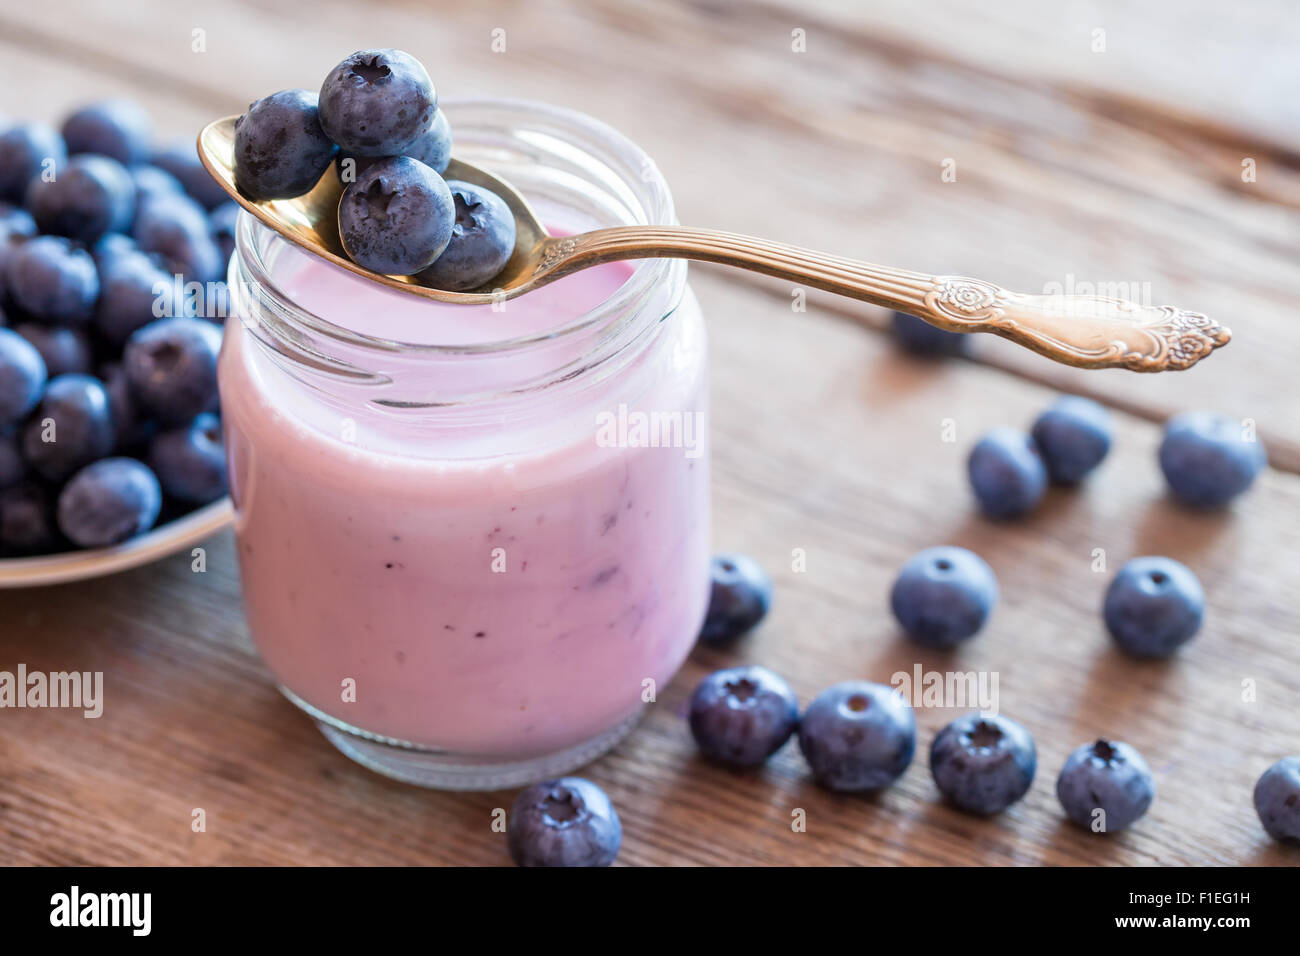 Fresh blueberries yogurt in glass jar, spoon and saucer of bilberries. Stock Photo